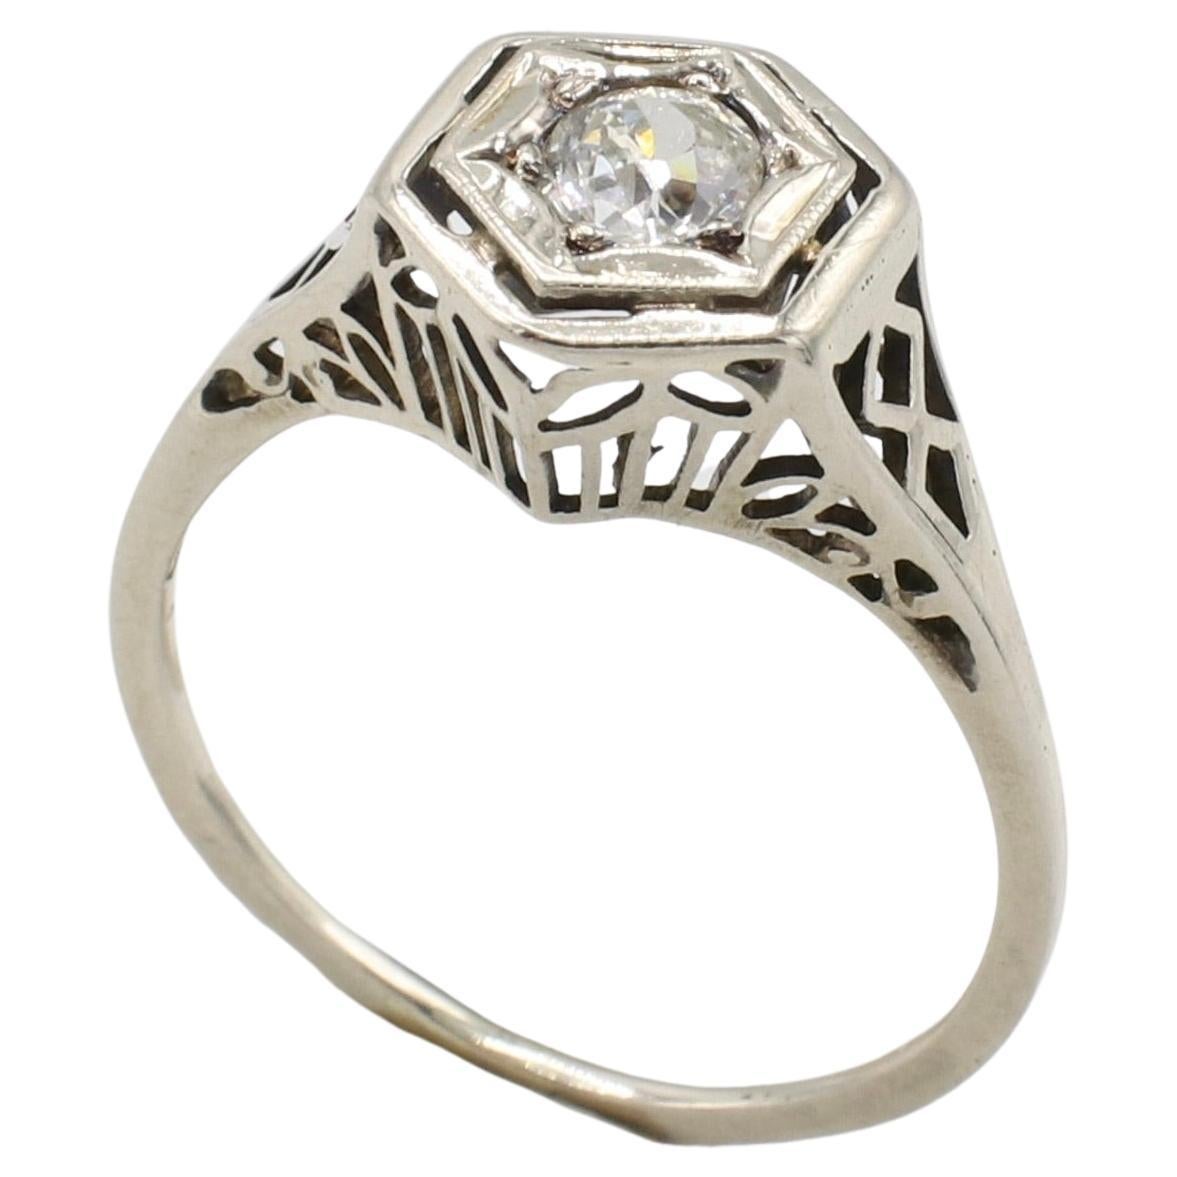 Art Deco 14 Karat White Gold Old Mine Cut Natural Diamond Ring 
Metal: 14k white gold
Weight: 1.70 grams
Diamond: Approx. .30 I VS Old. Mine cut natural diamond
Height: 7mm
Size: 7 (US)
Band width: 1mm 